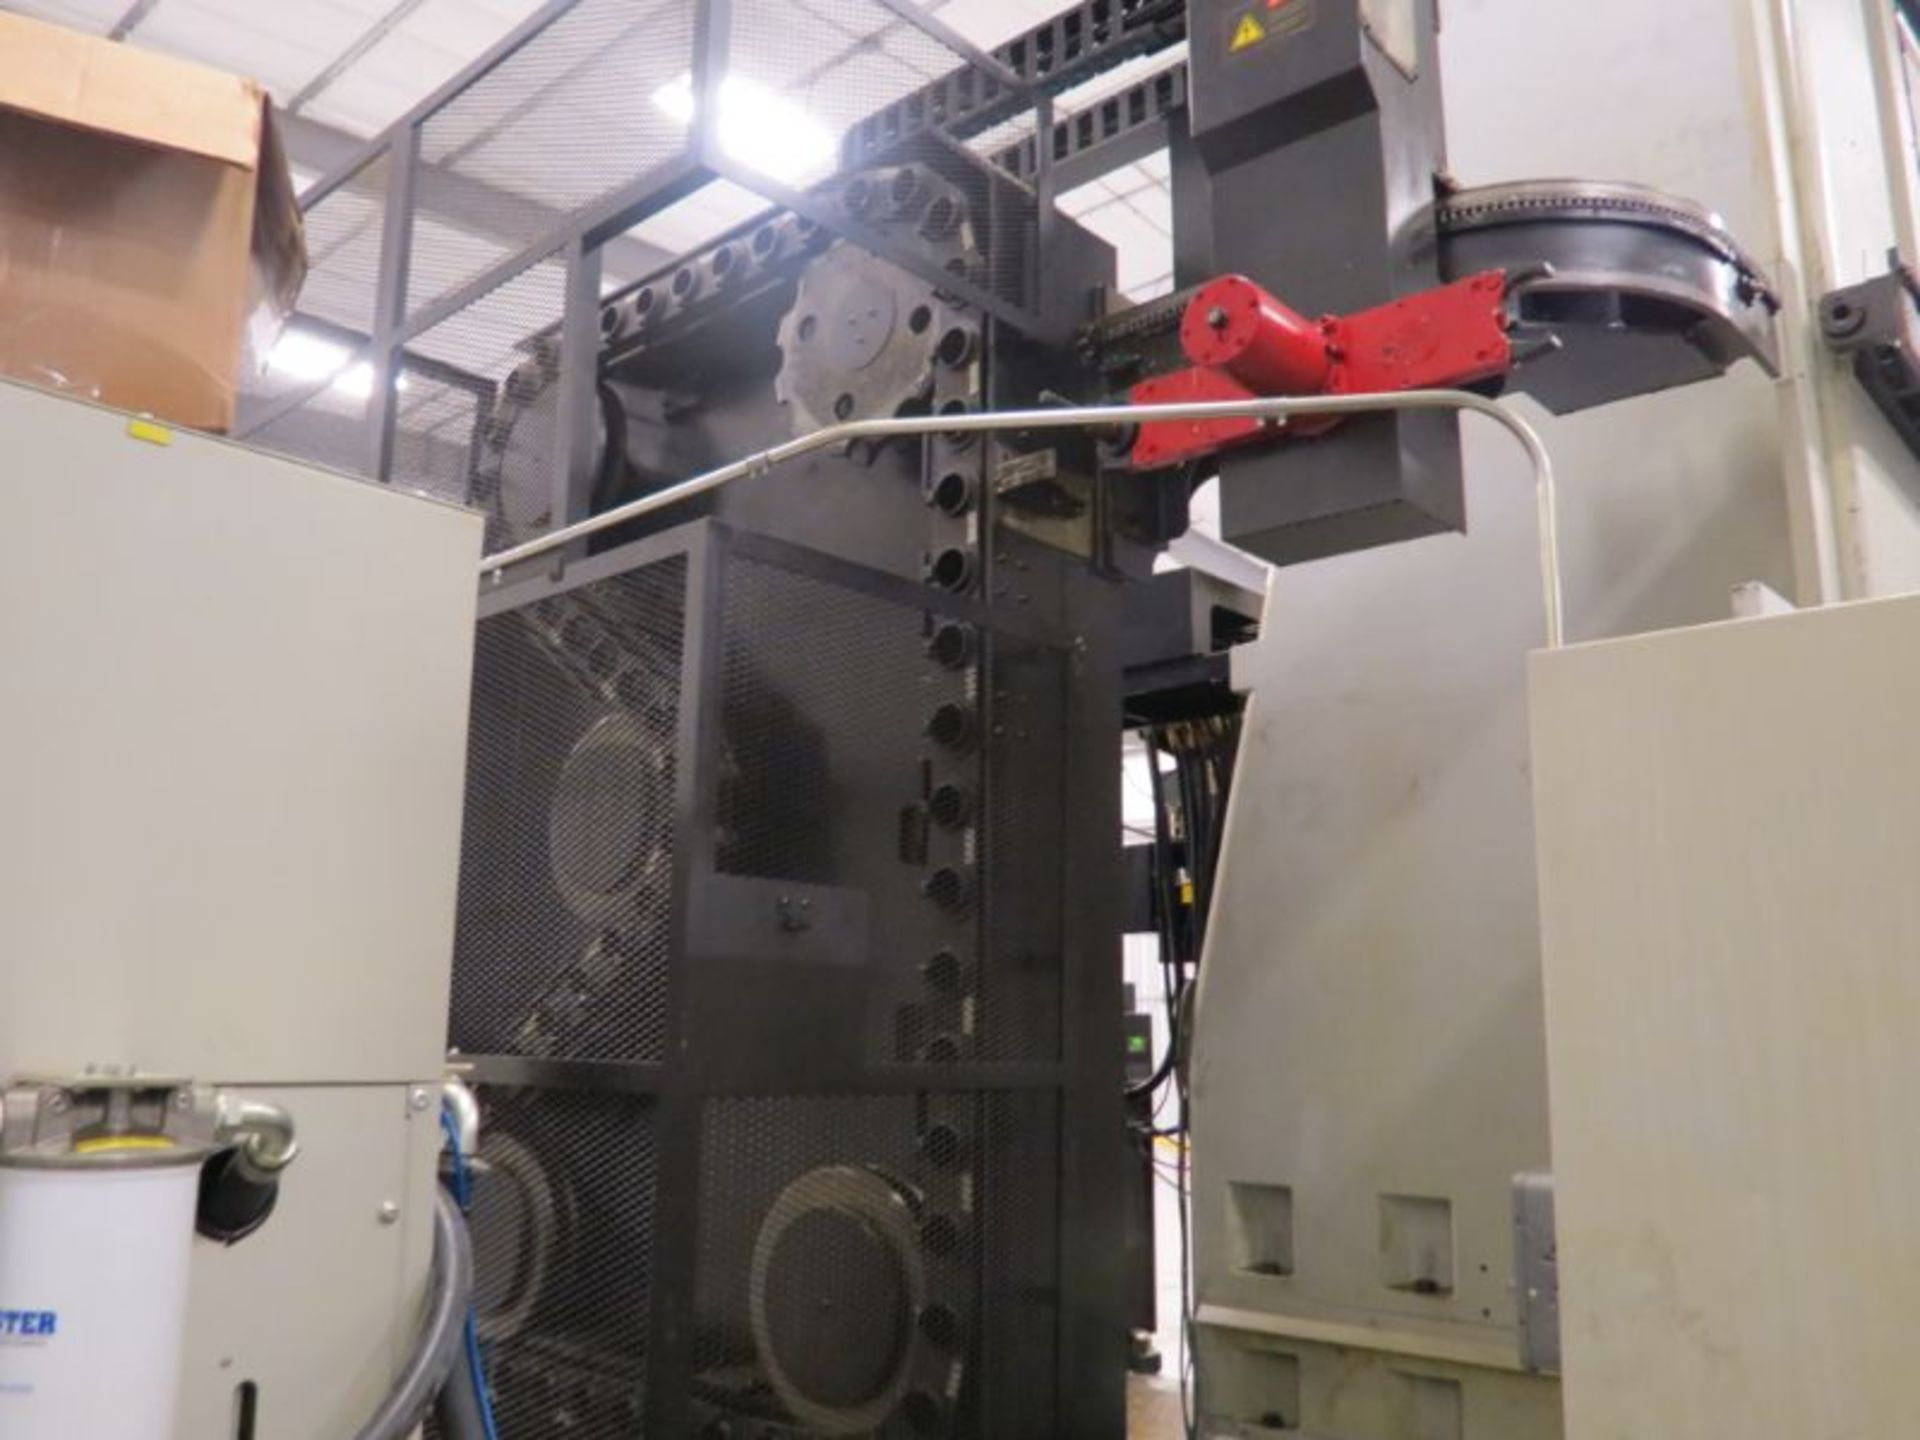 5"Doosan DBC130 CNC Horizontal Boring & Milling Machine, Fanuc 31-iA Ctrl *Located in Broussard, LA* - Image 21 of 27